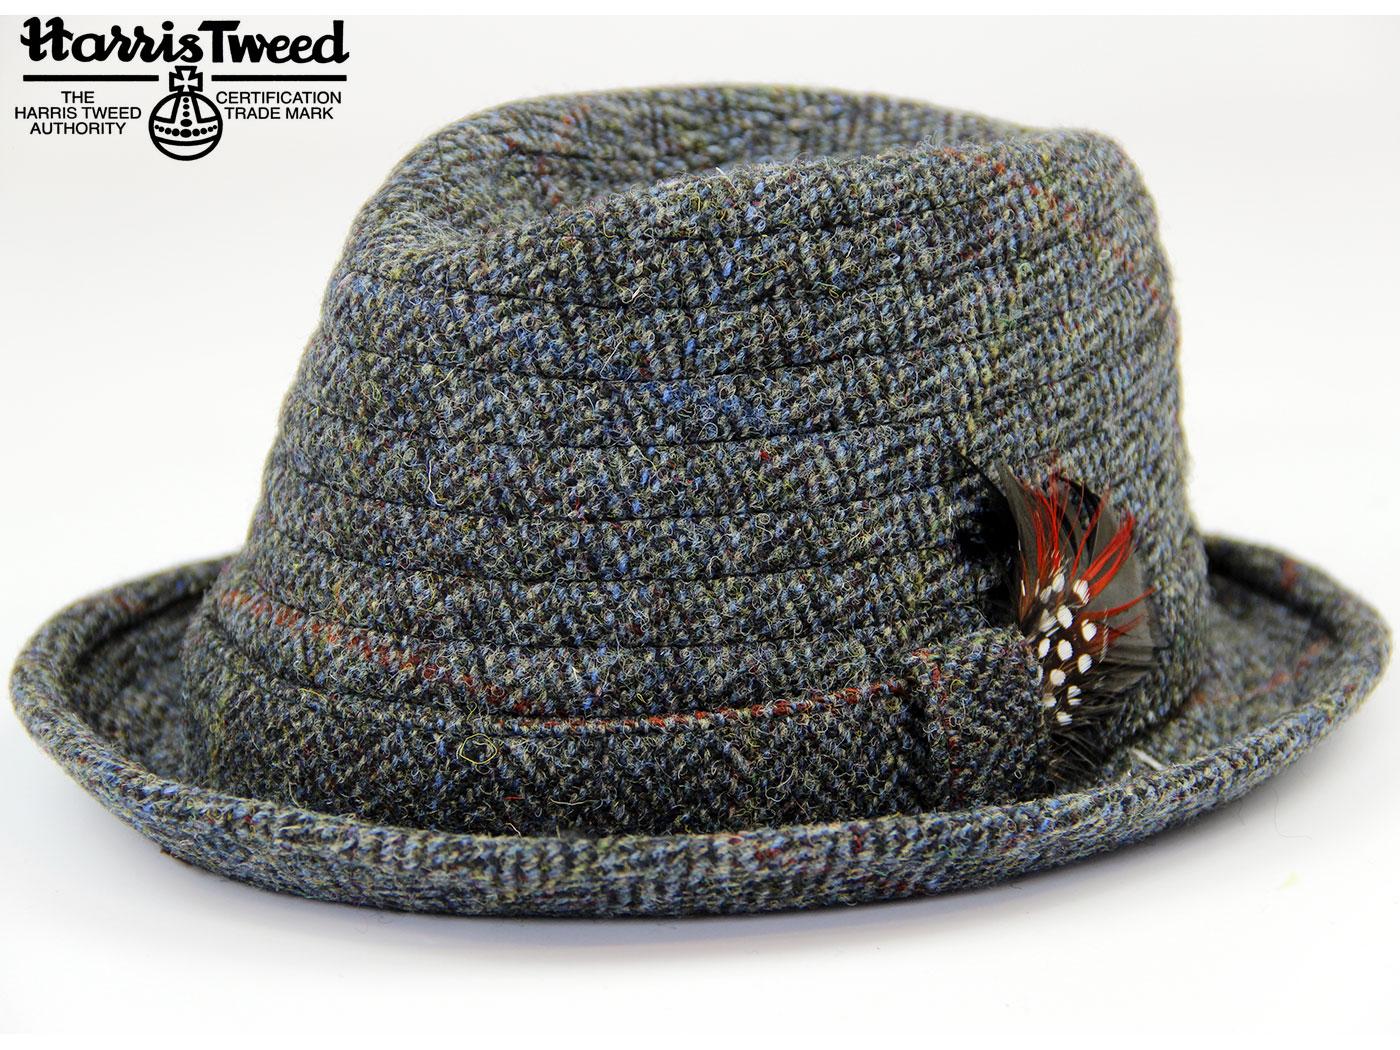 Orkney Harris Tweed Retro Mod Trilby Hat (Grey)